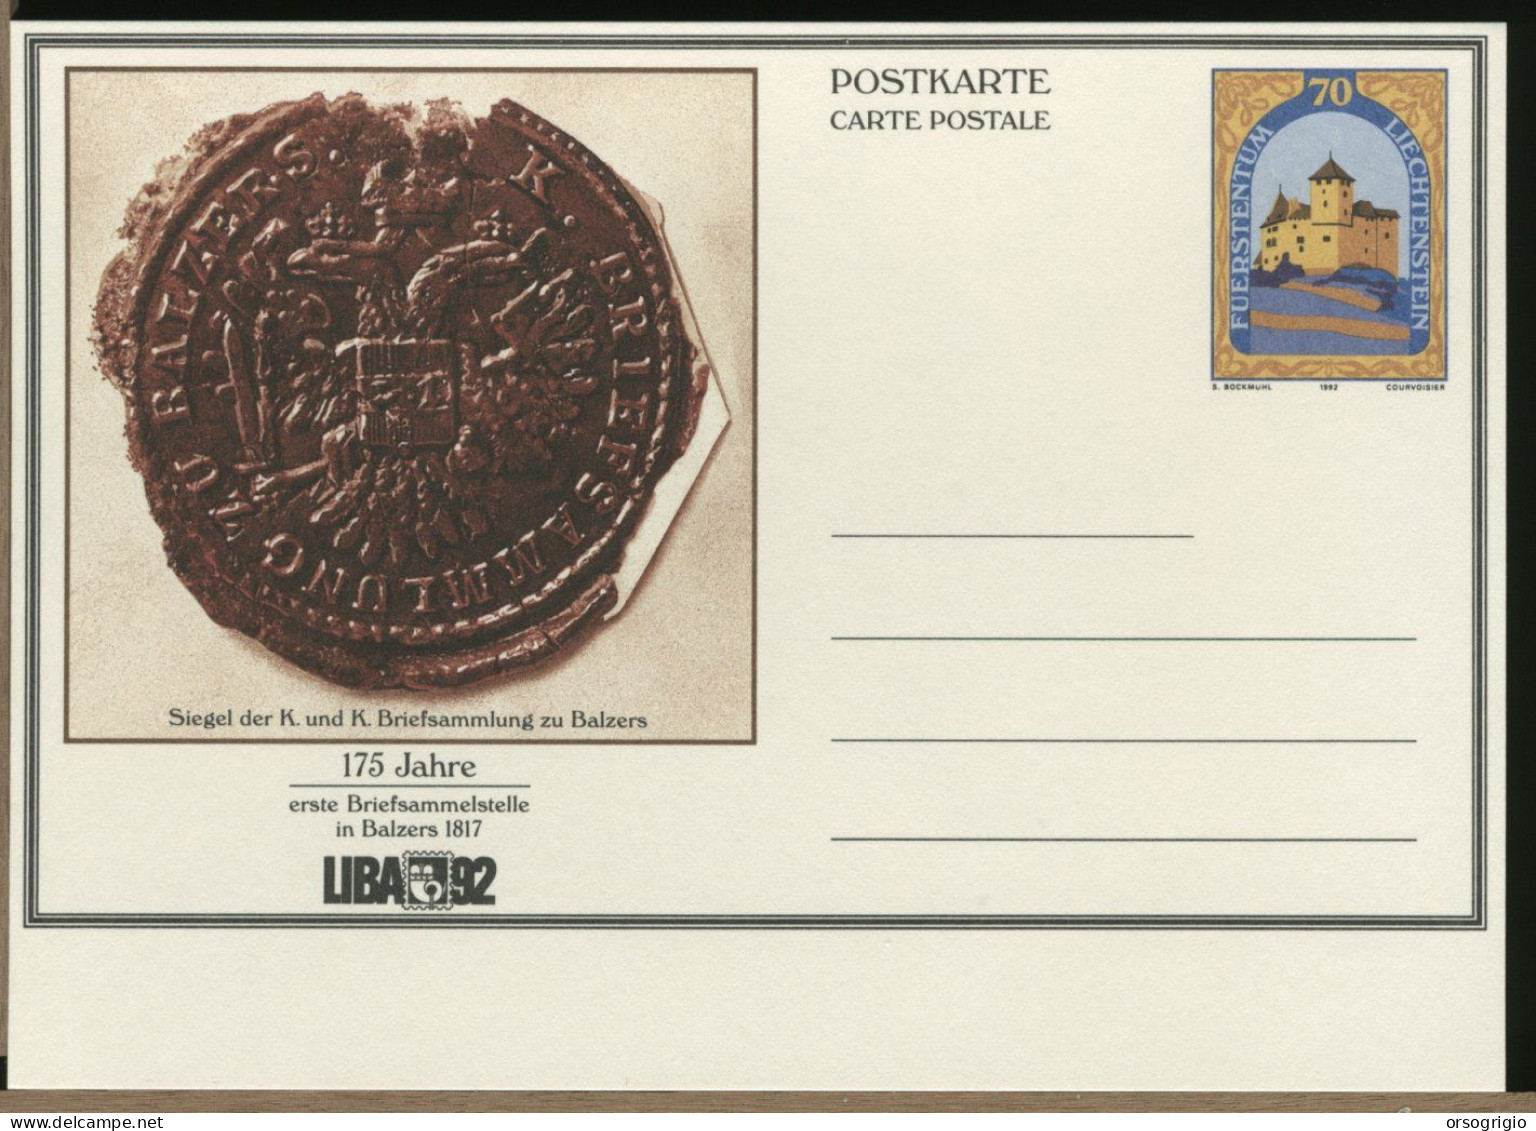 LIECHTENSTEIN - Cartolina Intero Postale - POSTKARTE - BALZERS - LIBA 1992 - Enteros Postales